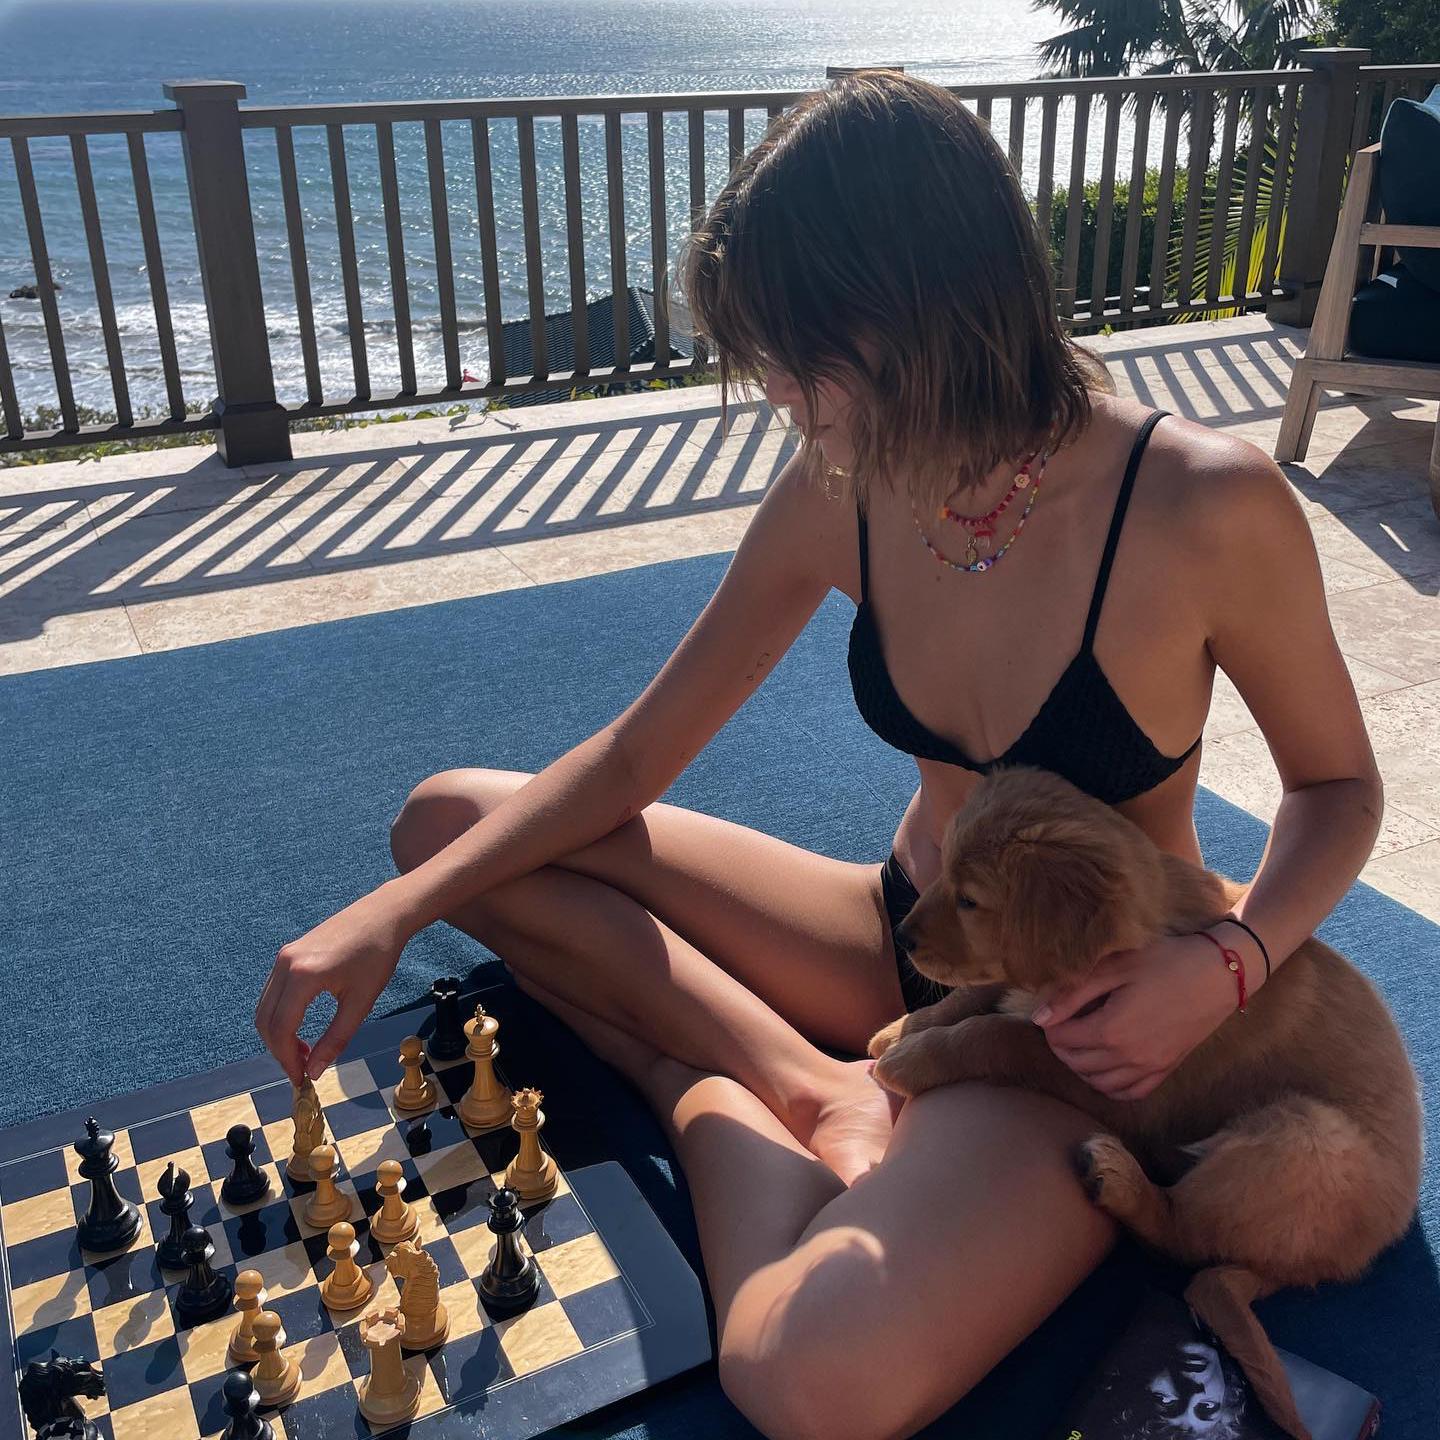 La modelo Kaia Gerber sentada en bikini jugando al ajedrez con un perro a su lado